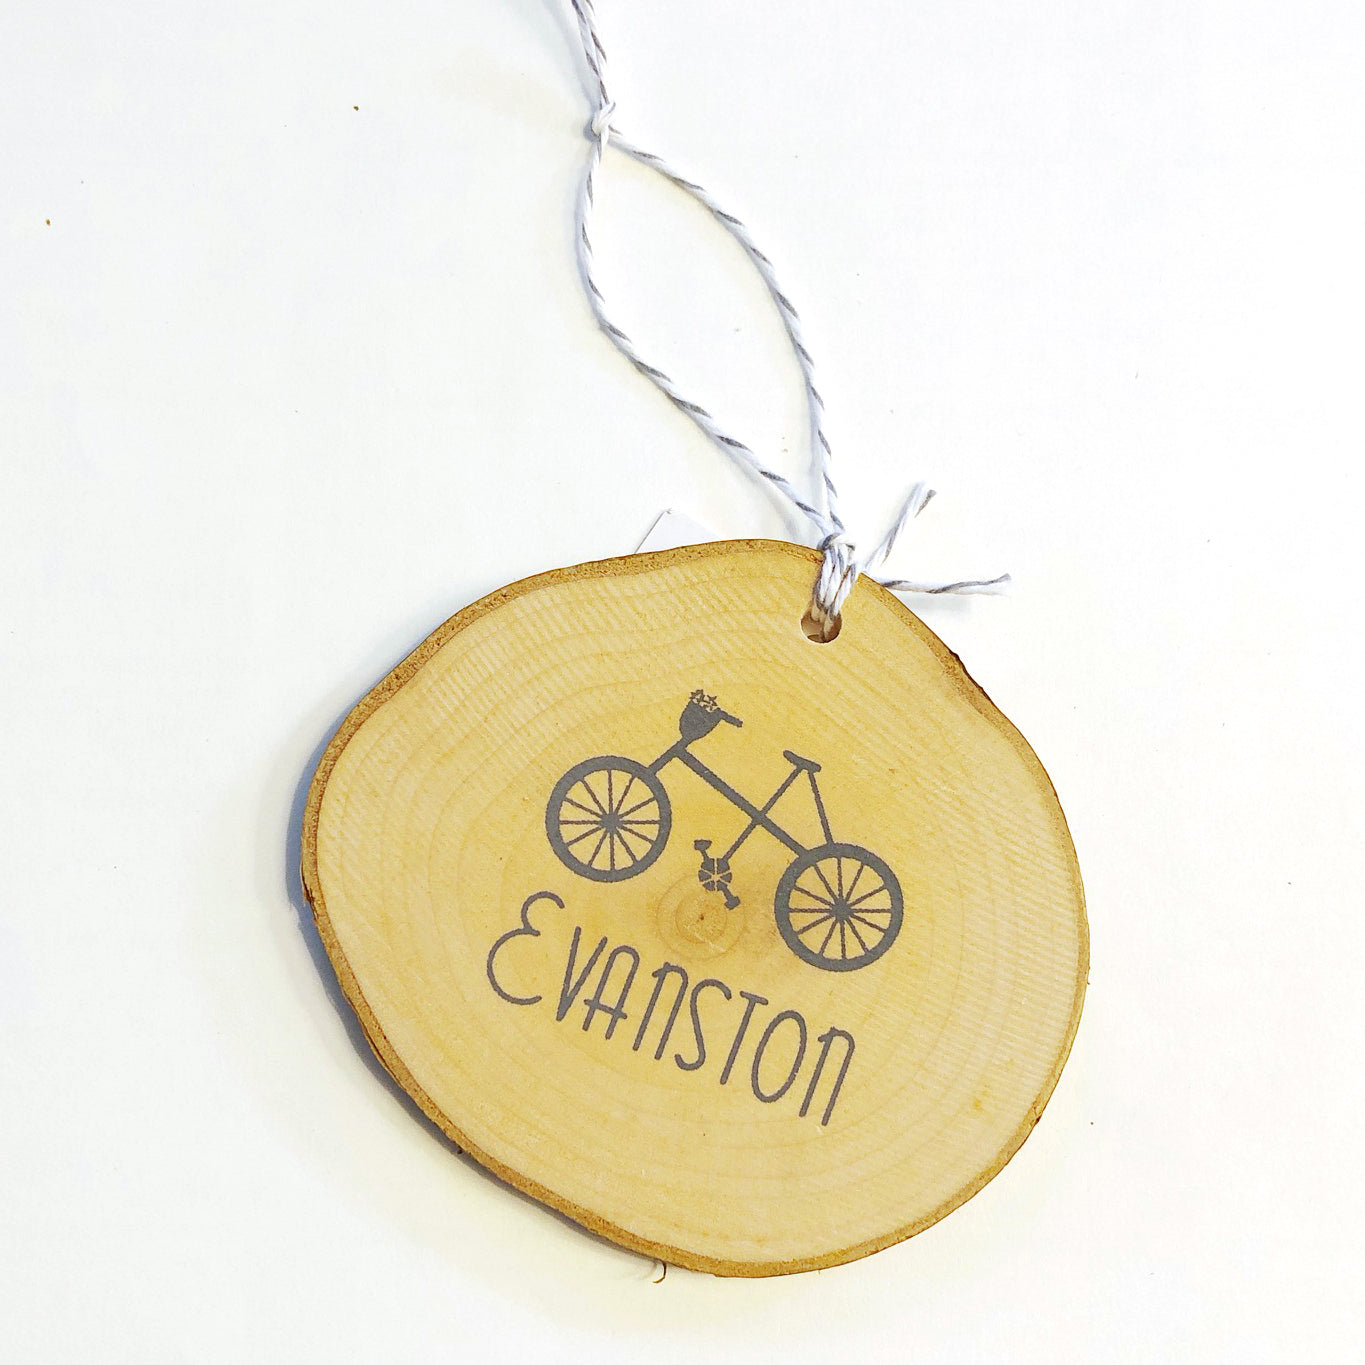 Gray Evanston Bicycle Ornament